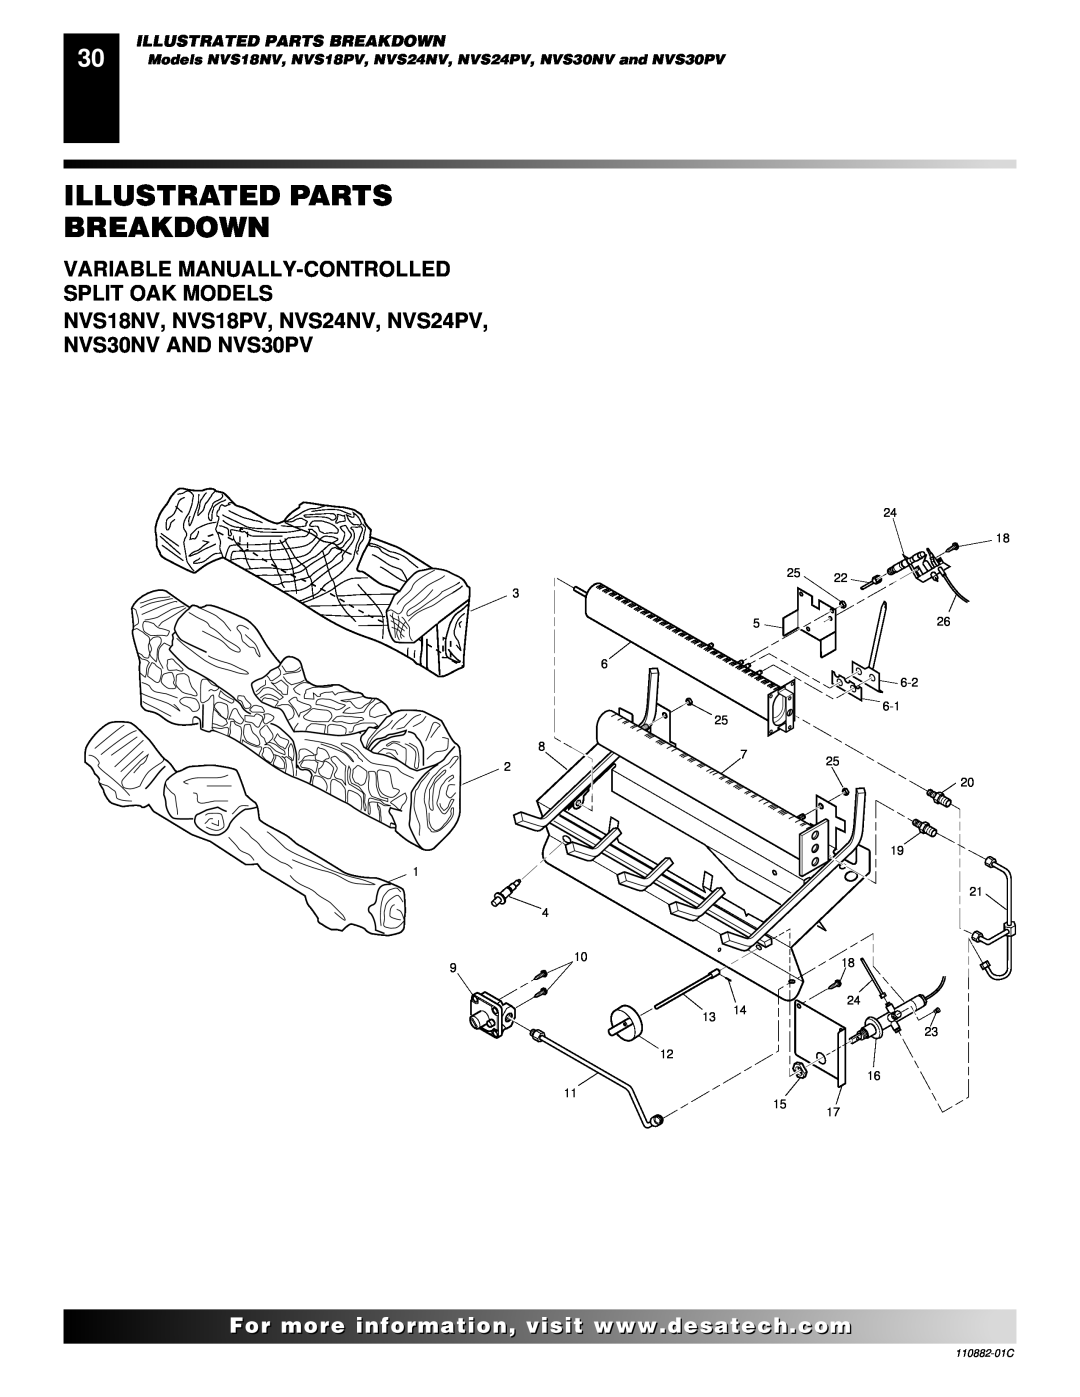 Desa 30 Illustrated Parts Breakdown, Variable Manually-Controlled Split Oak Models, NVS18NV, NVS18PV, NVS24NV, NVS24PV 